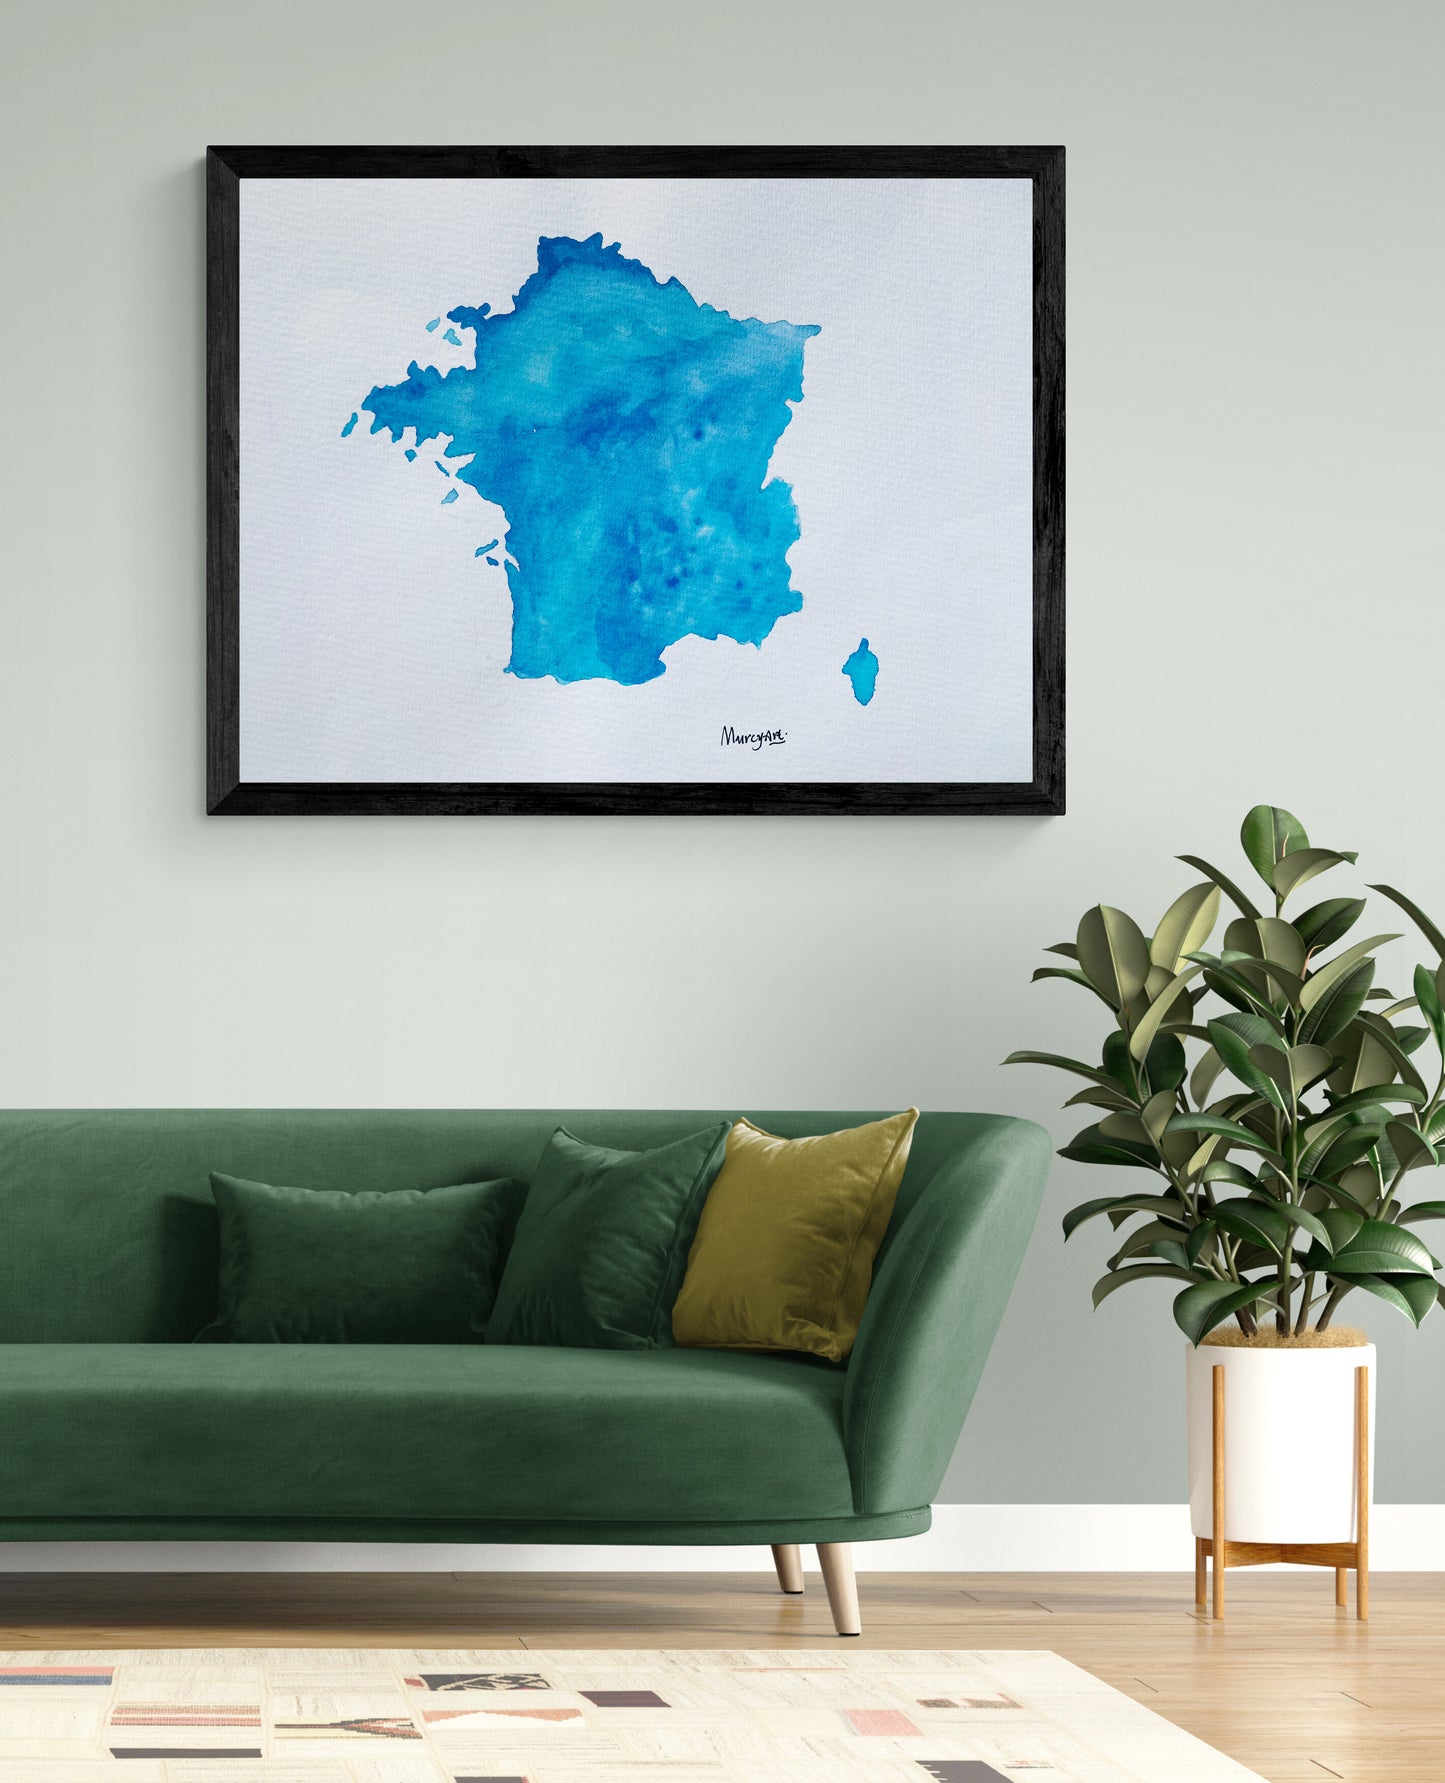 “France Map”